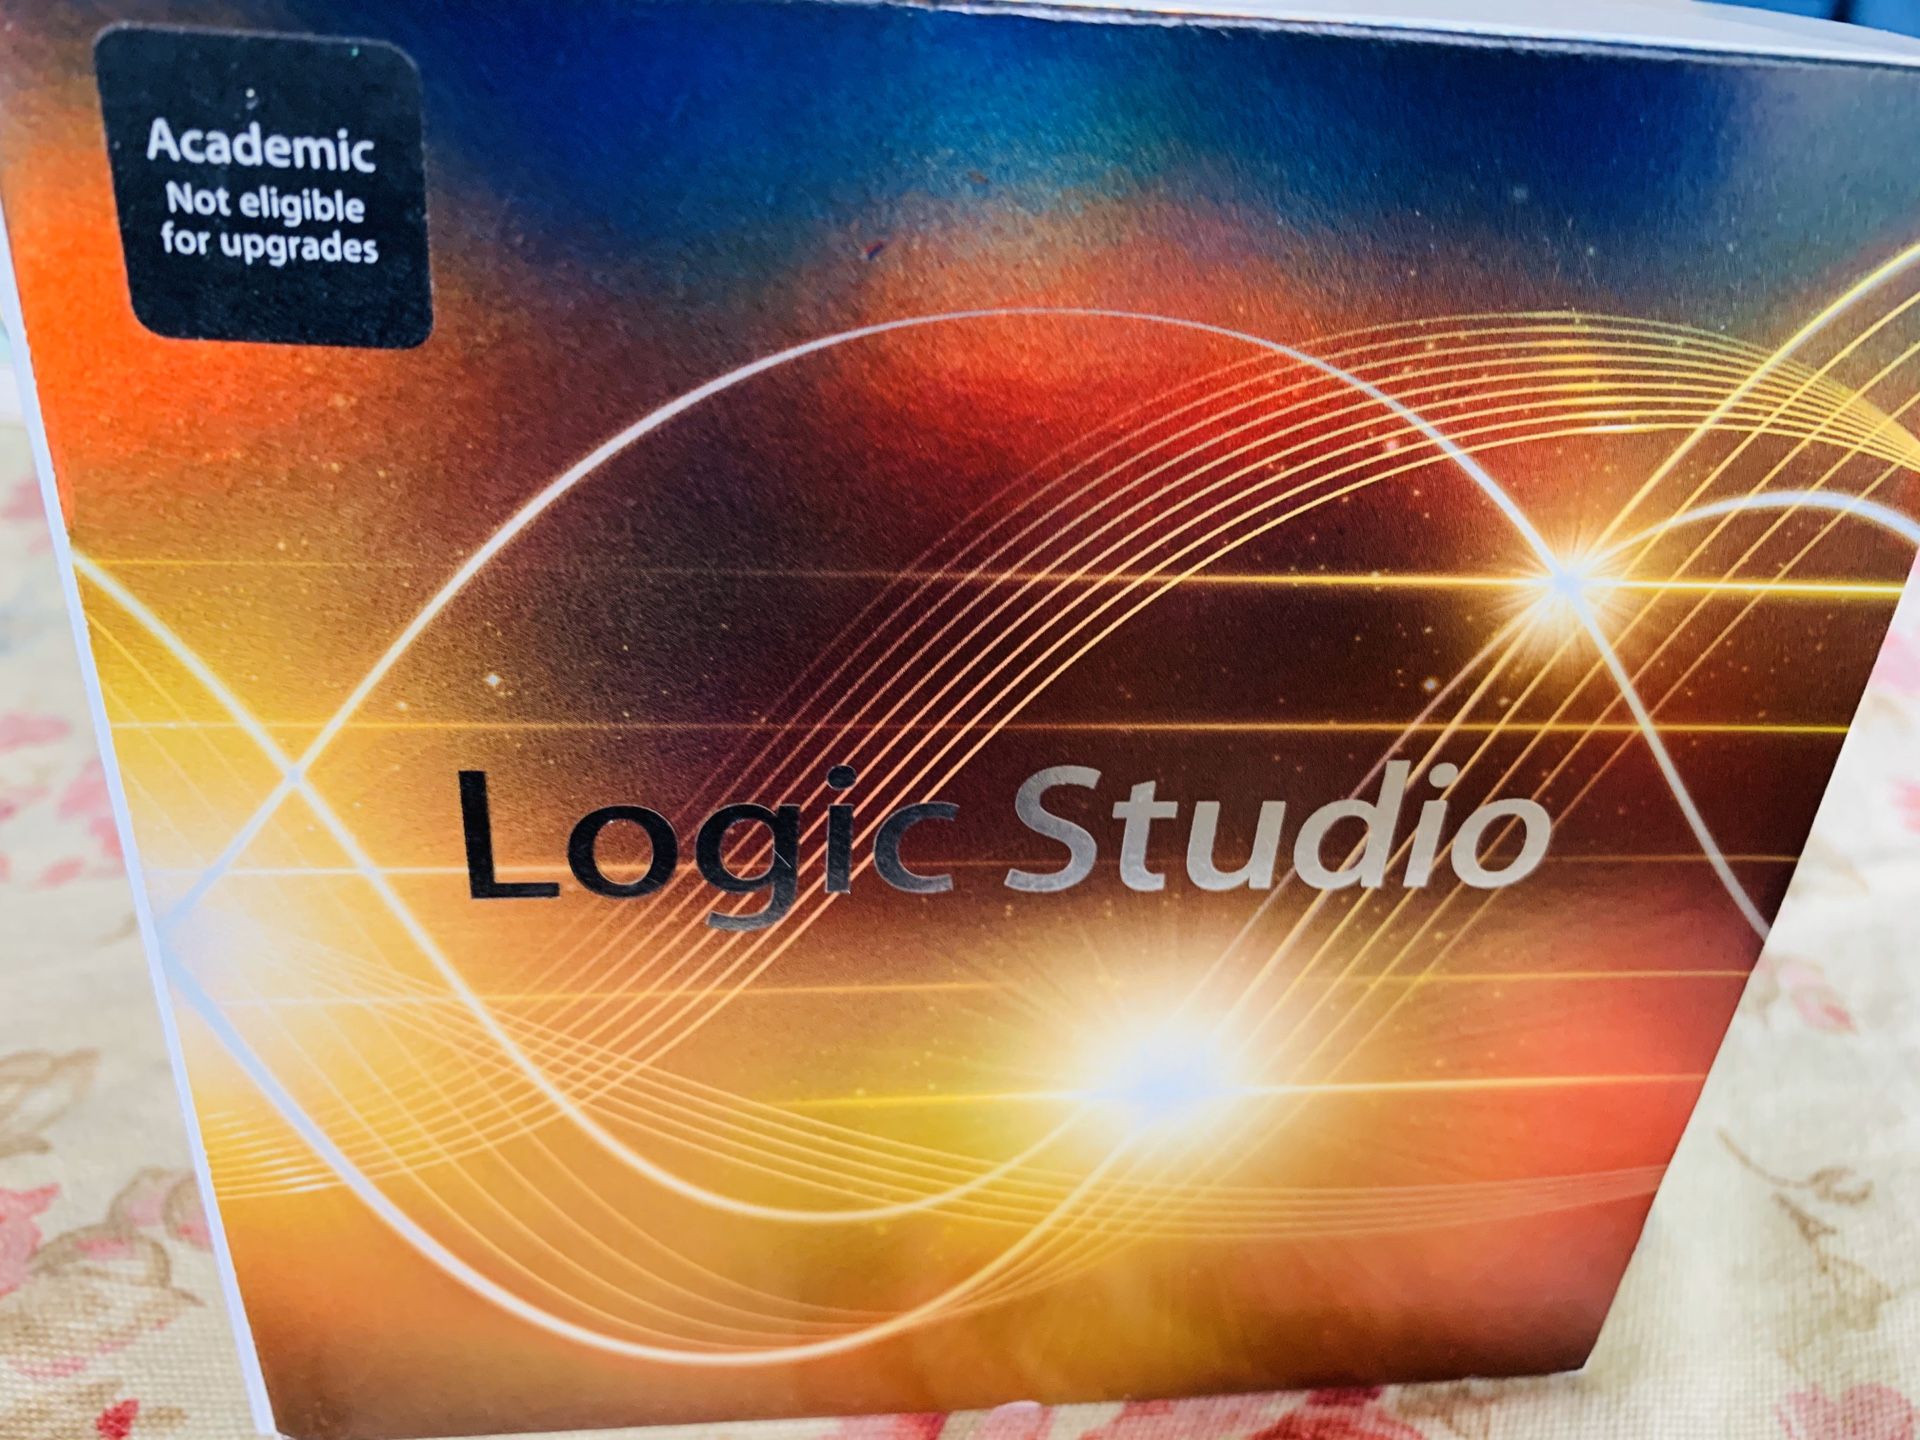 Logic Studio v2.0 academic